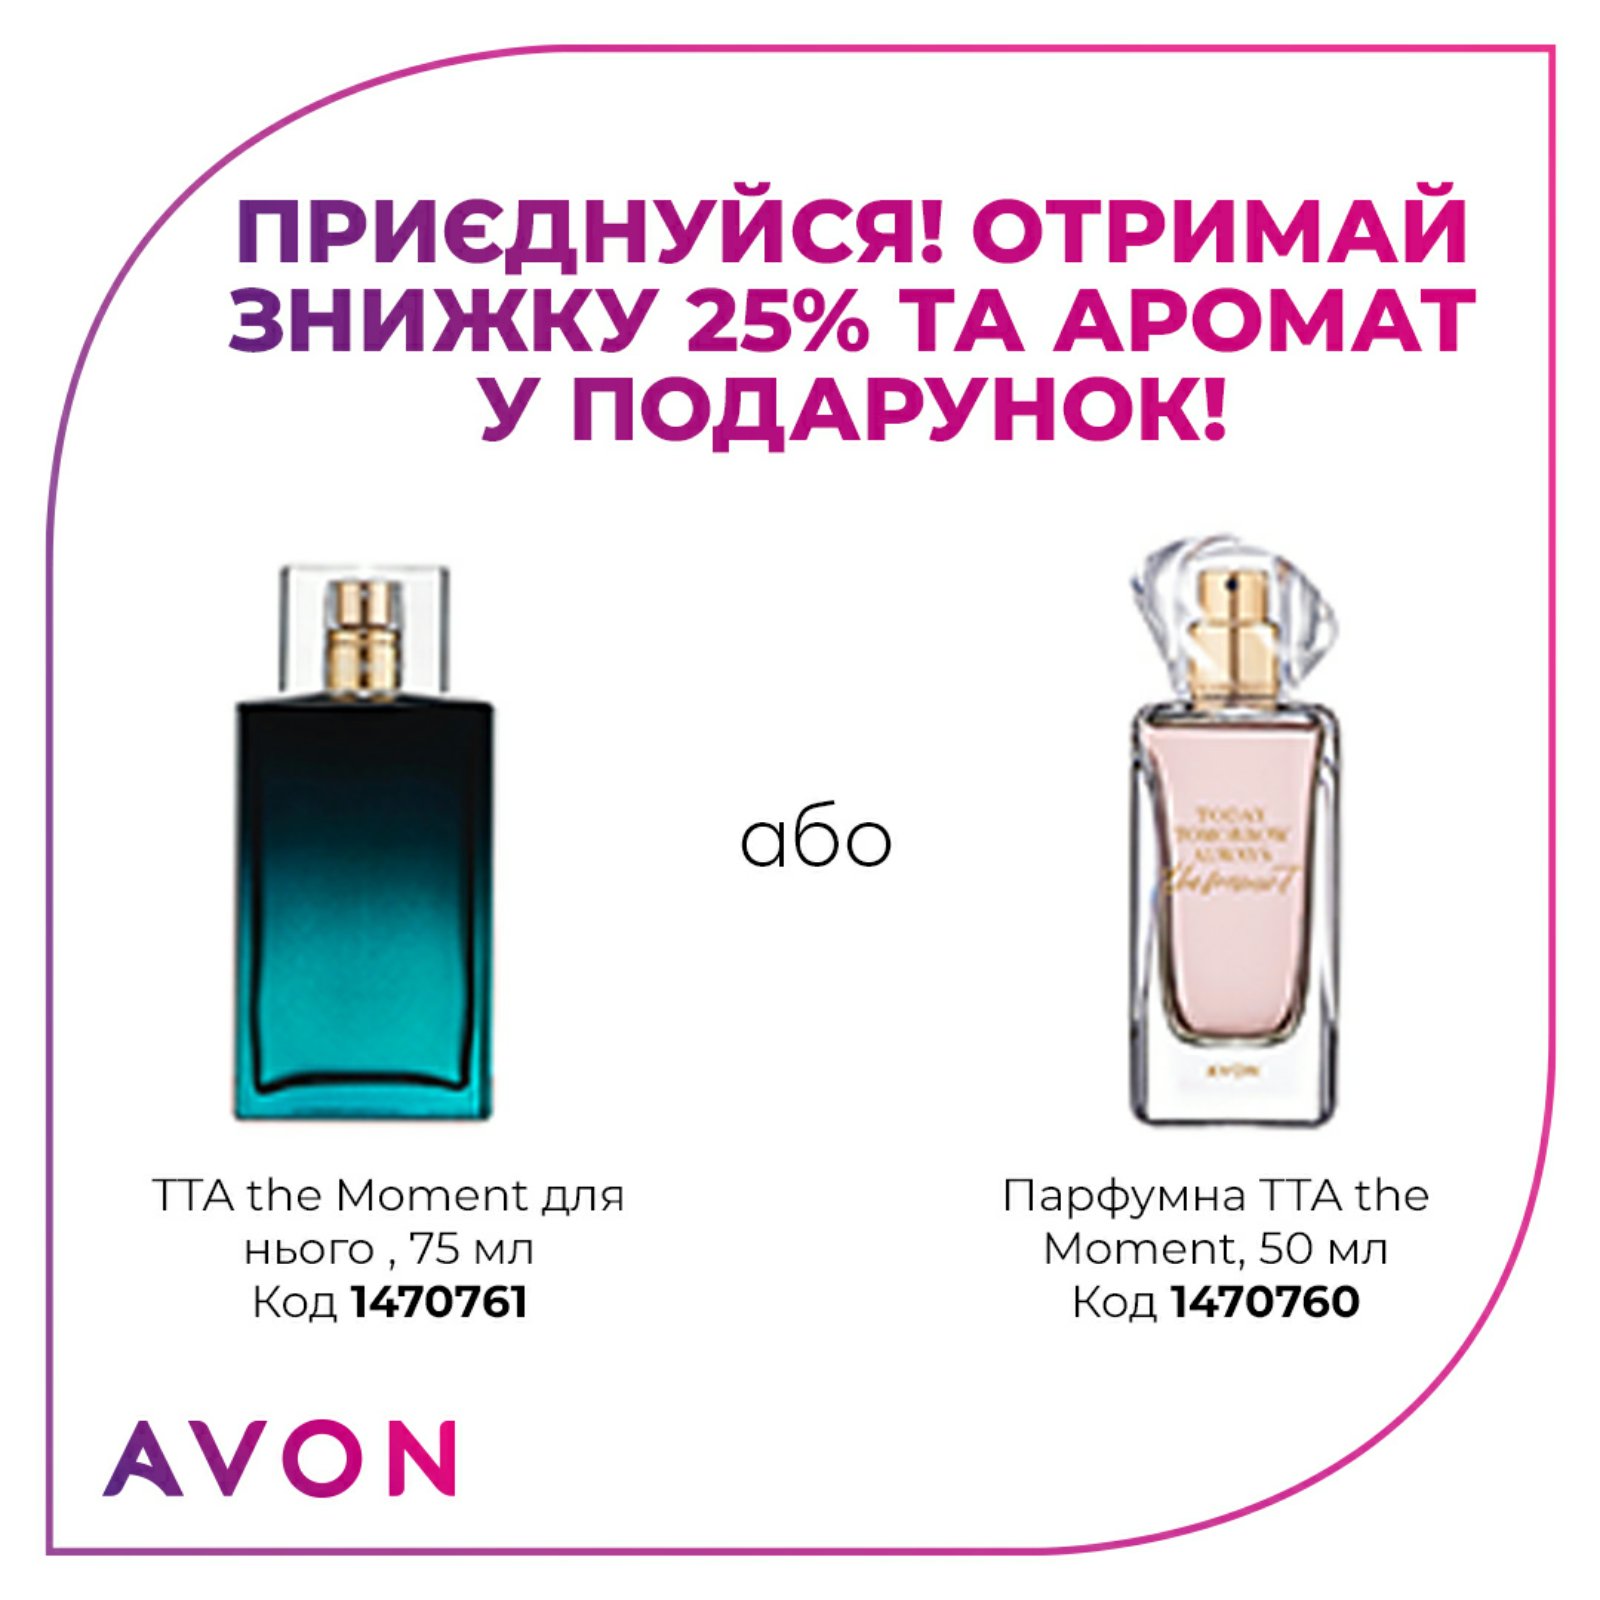 Регистрация  Avon Украина